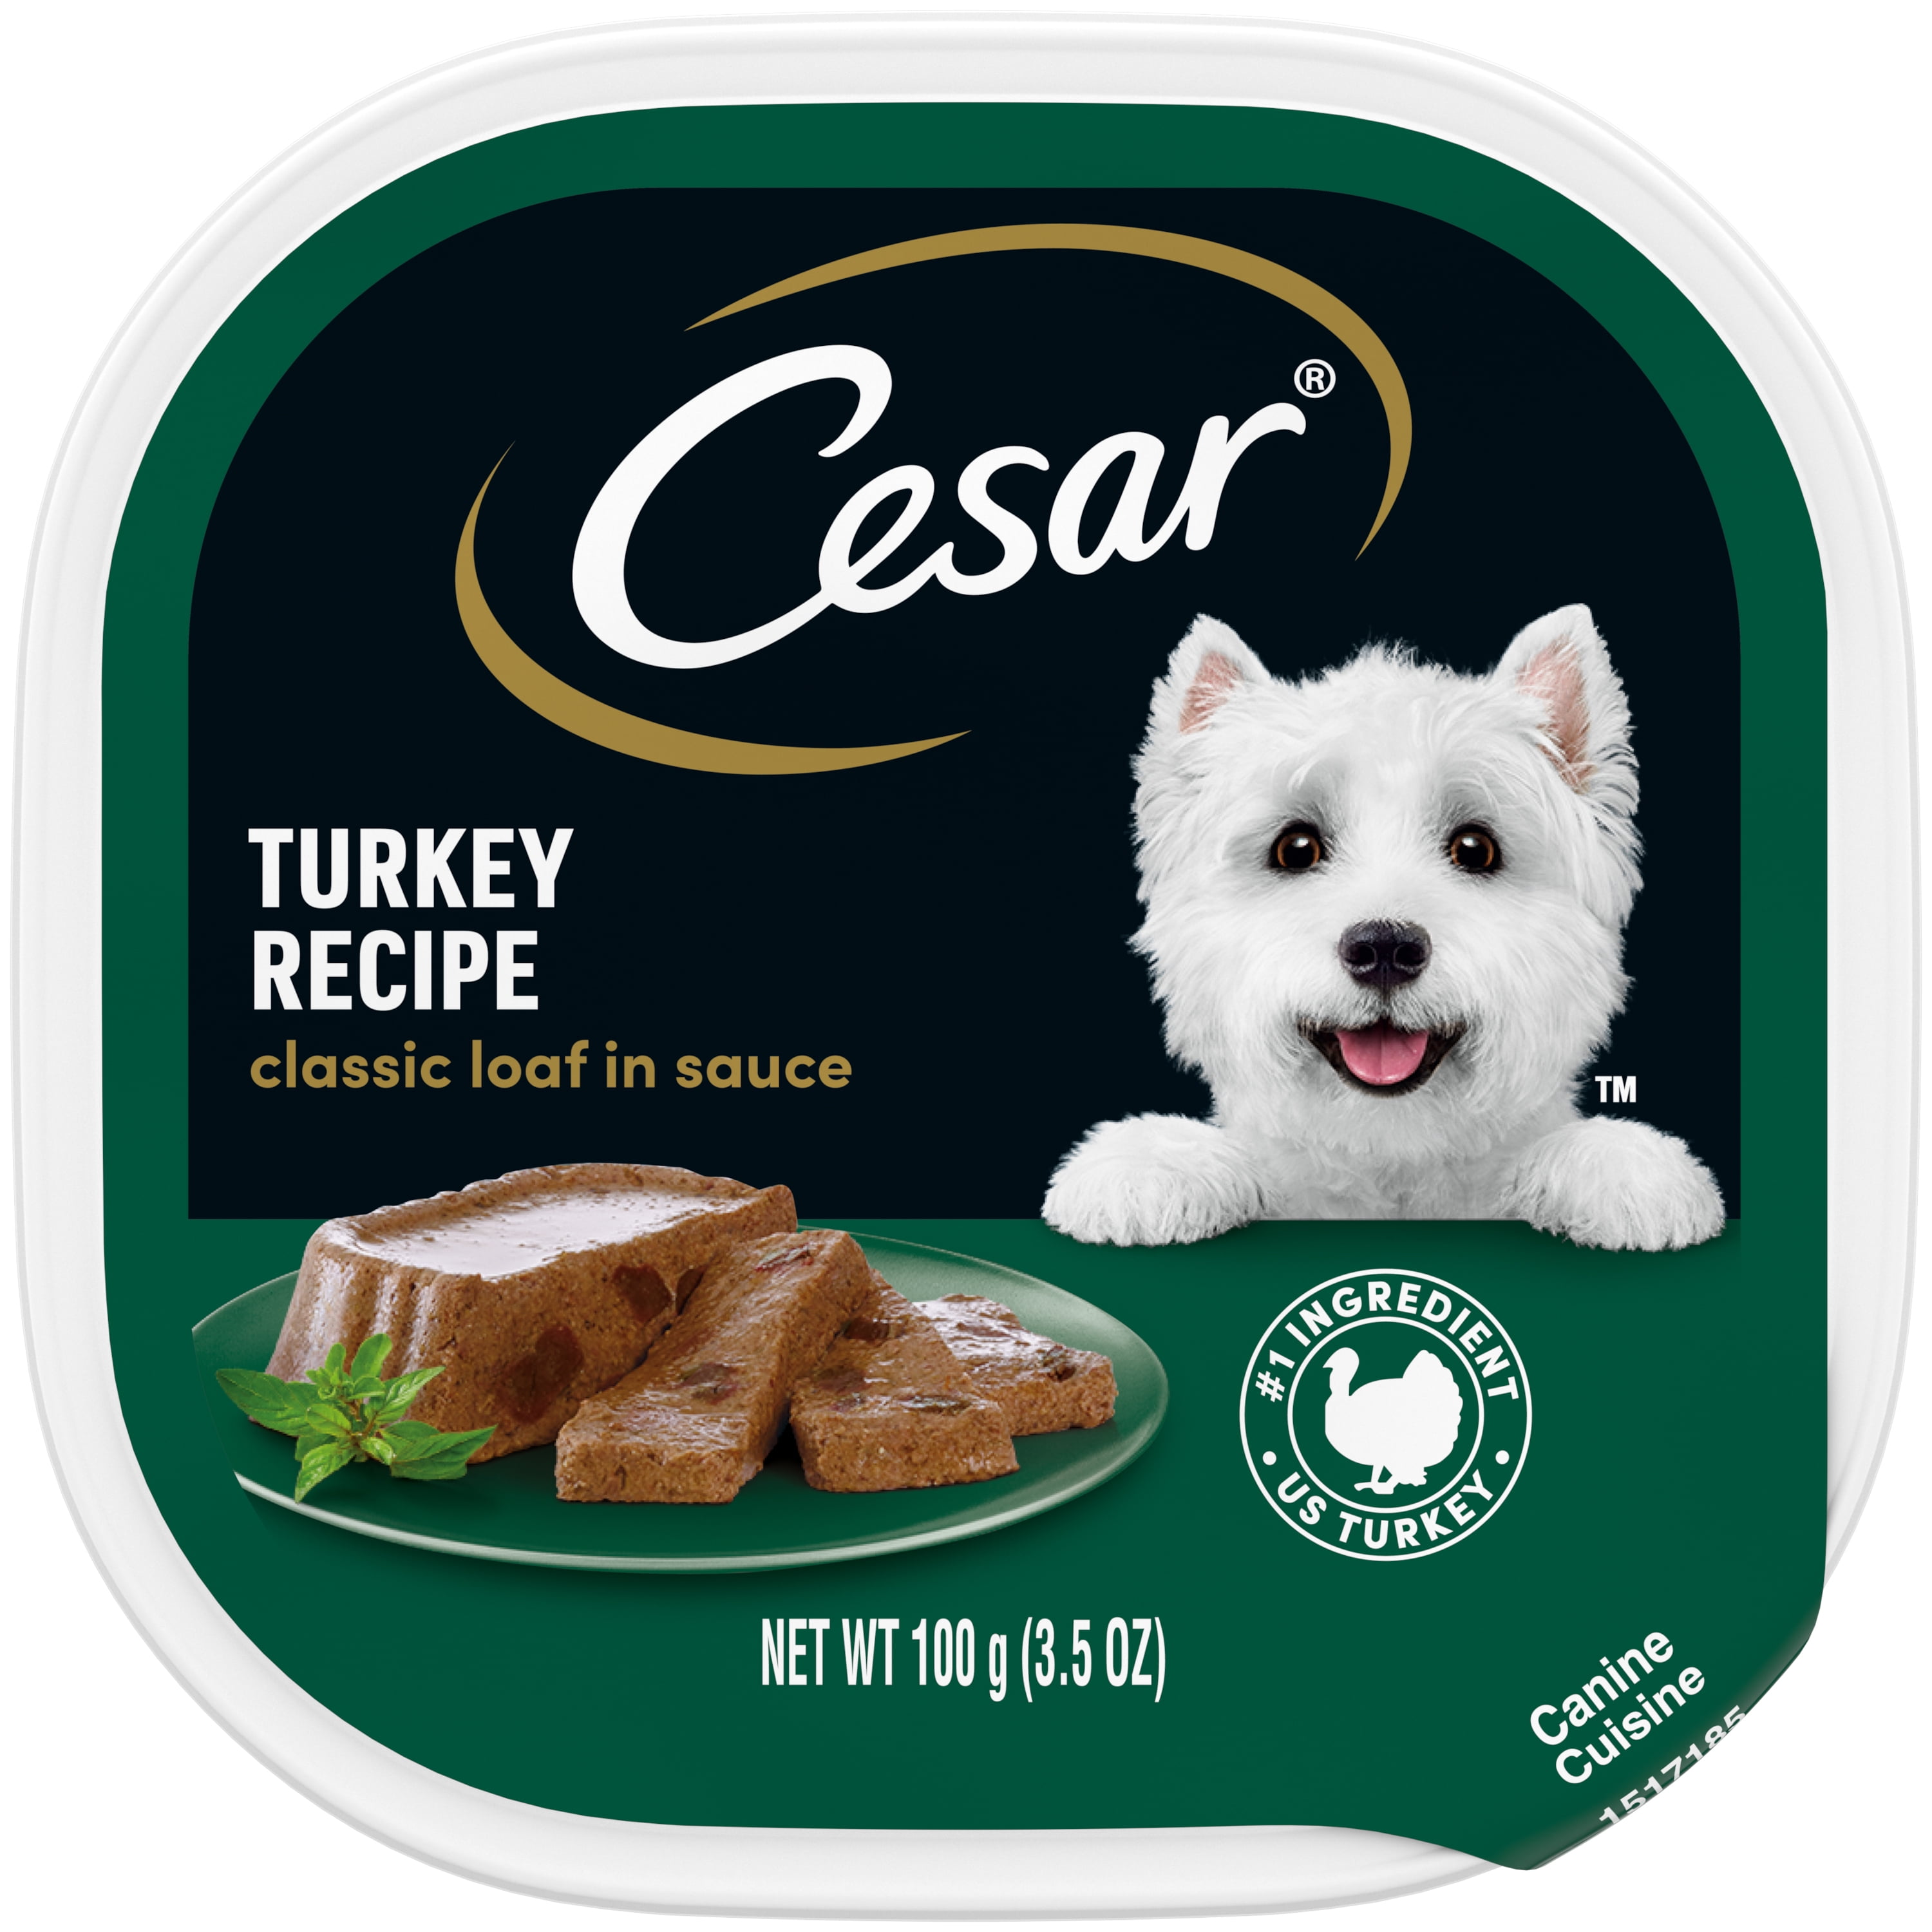 Cesar Classic Loaf in Sauce Turkey Recipe Dog Food, 3.5 oz